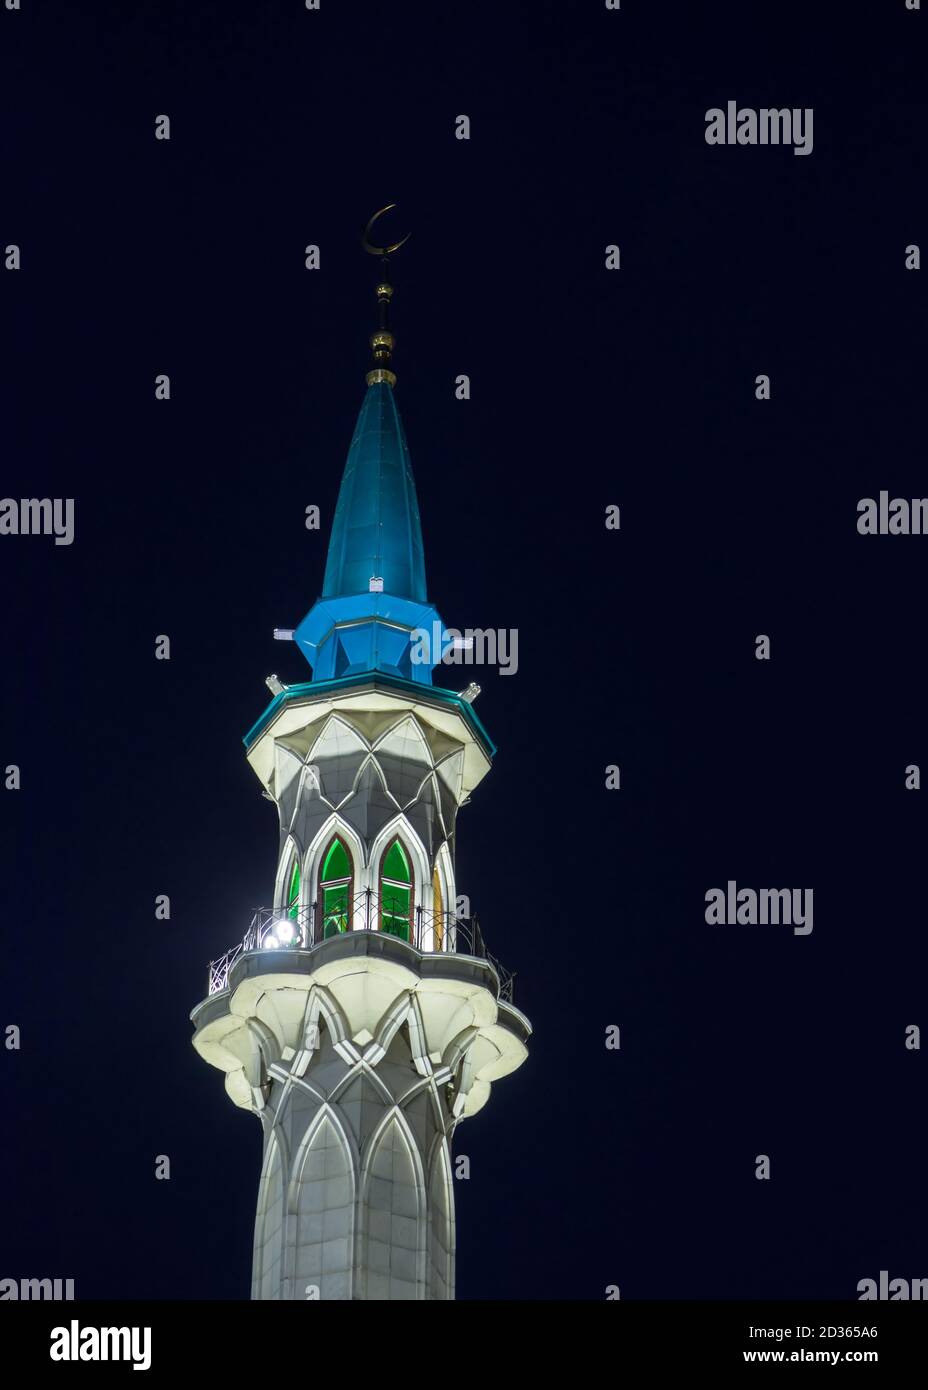 Mosque minaret with night illumination close-up Stock Photo